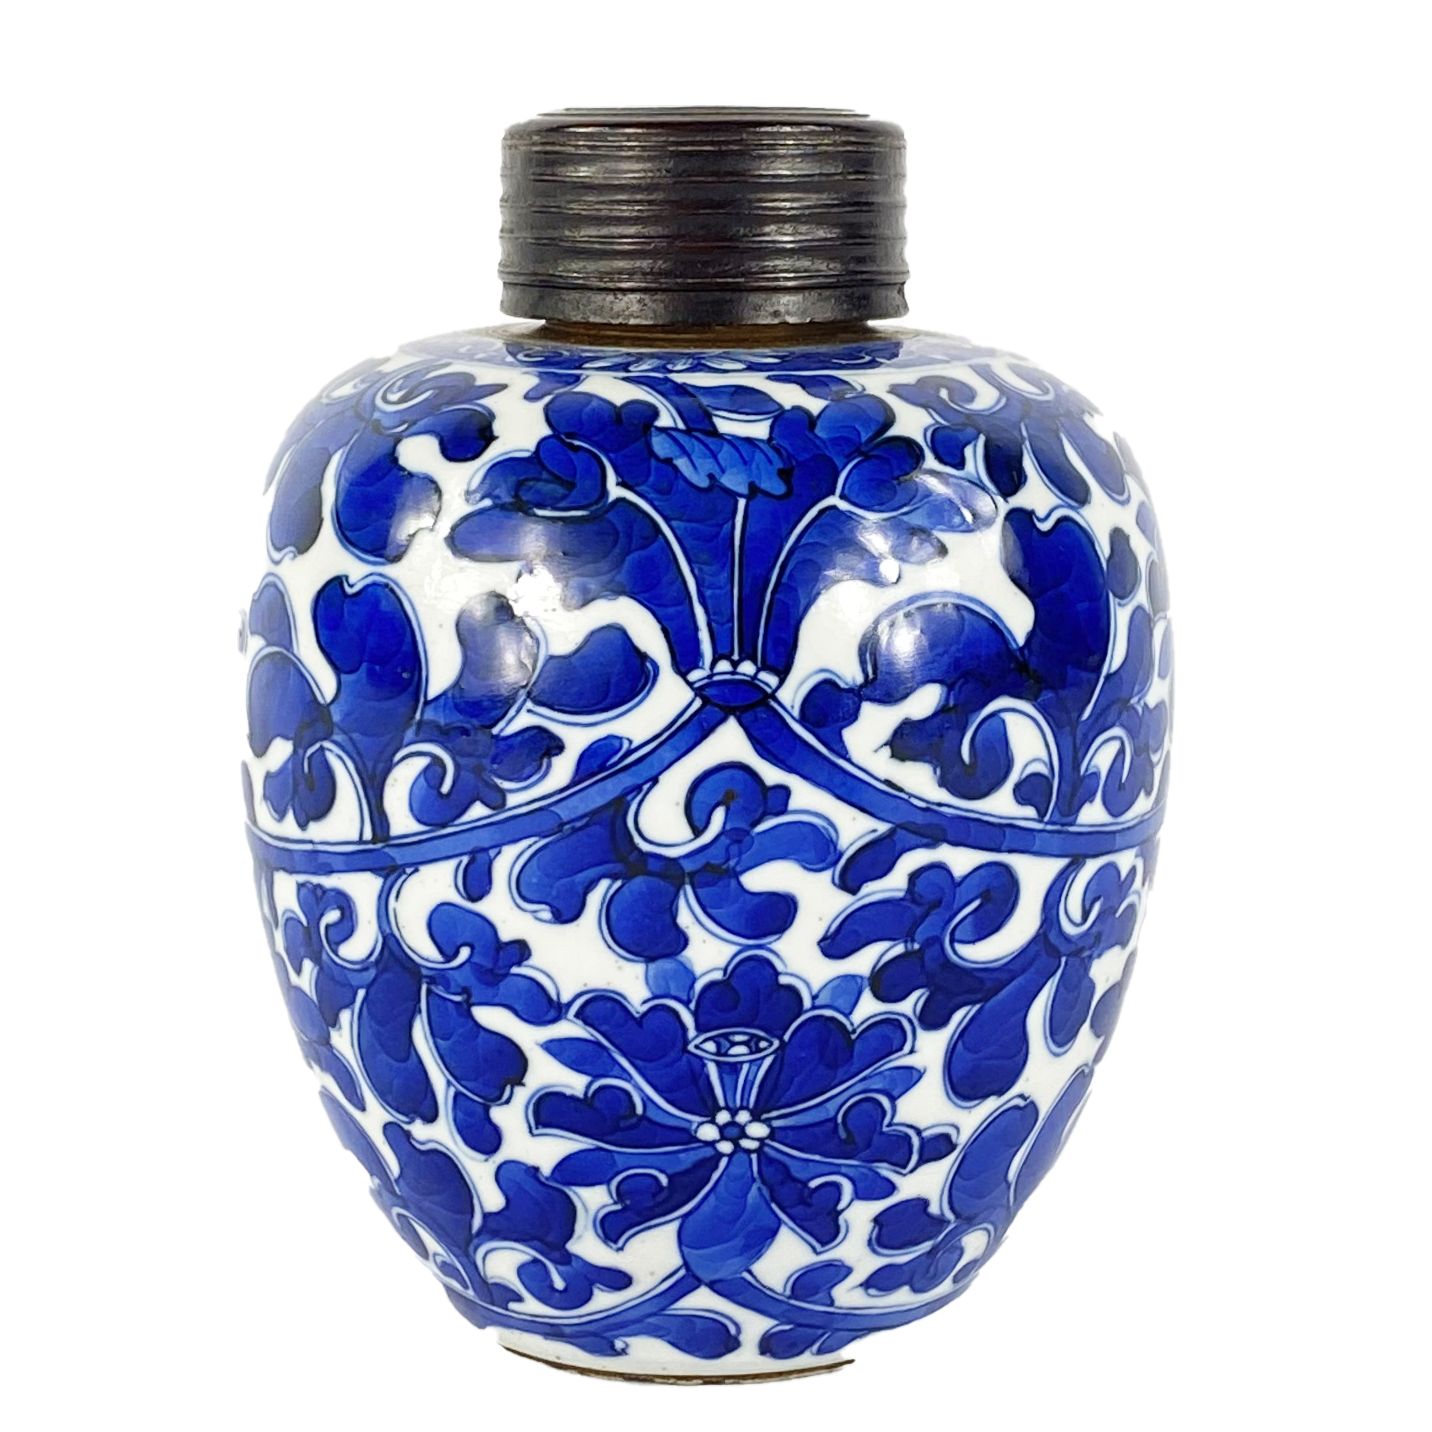 China (20th century), porcelain covered vase